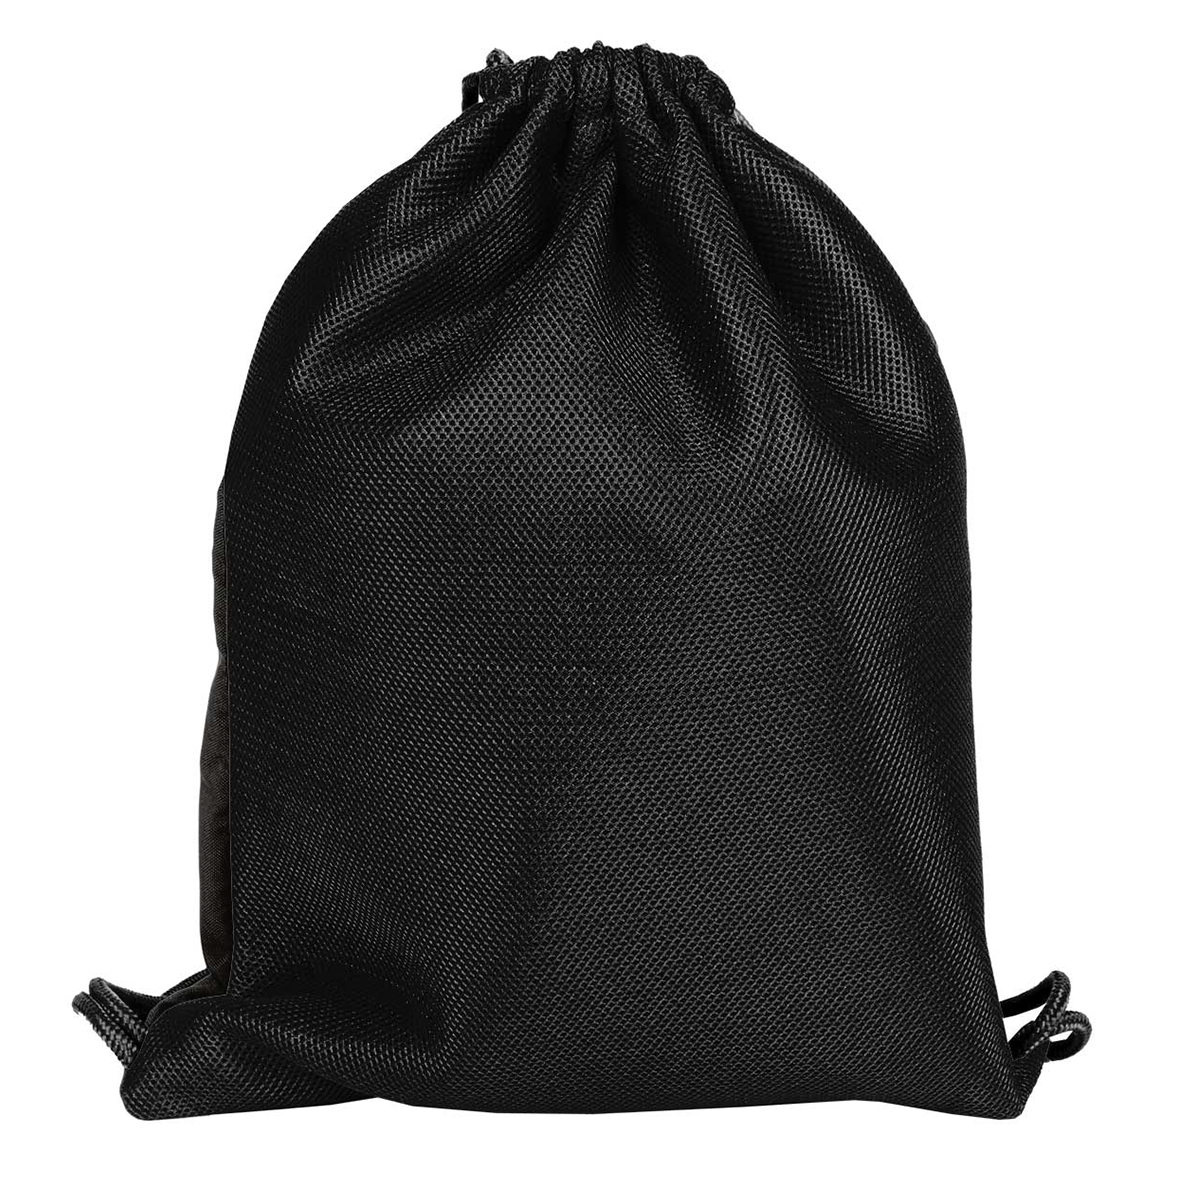 Gym bag, Next Level - 41 x 34 cm - Polyester